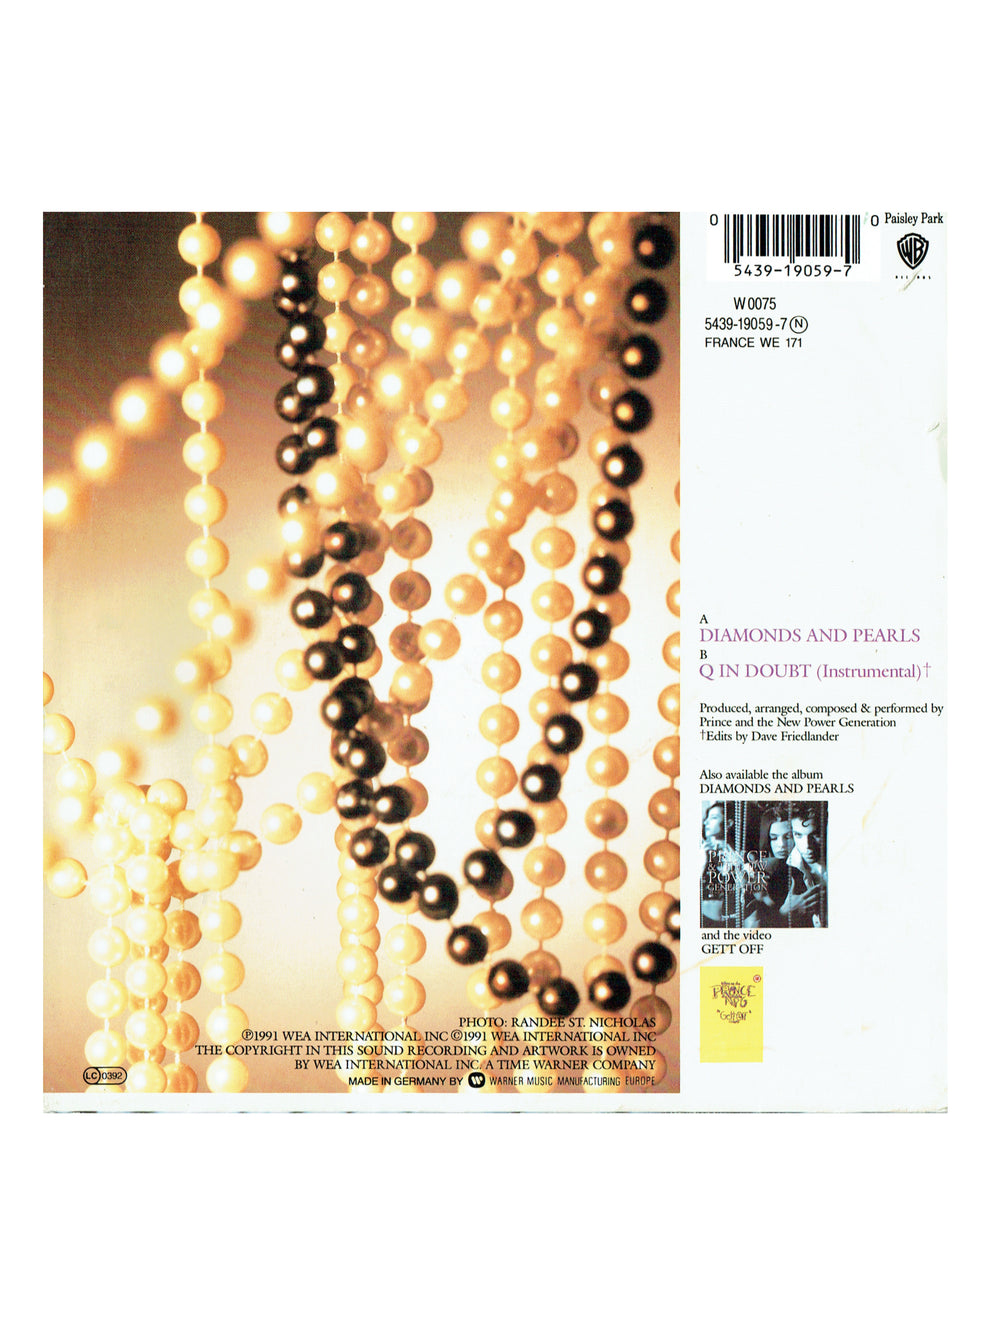 Prince Diamonds & Pearls 7 Inch Single PS Release 1991 W0075 MRM